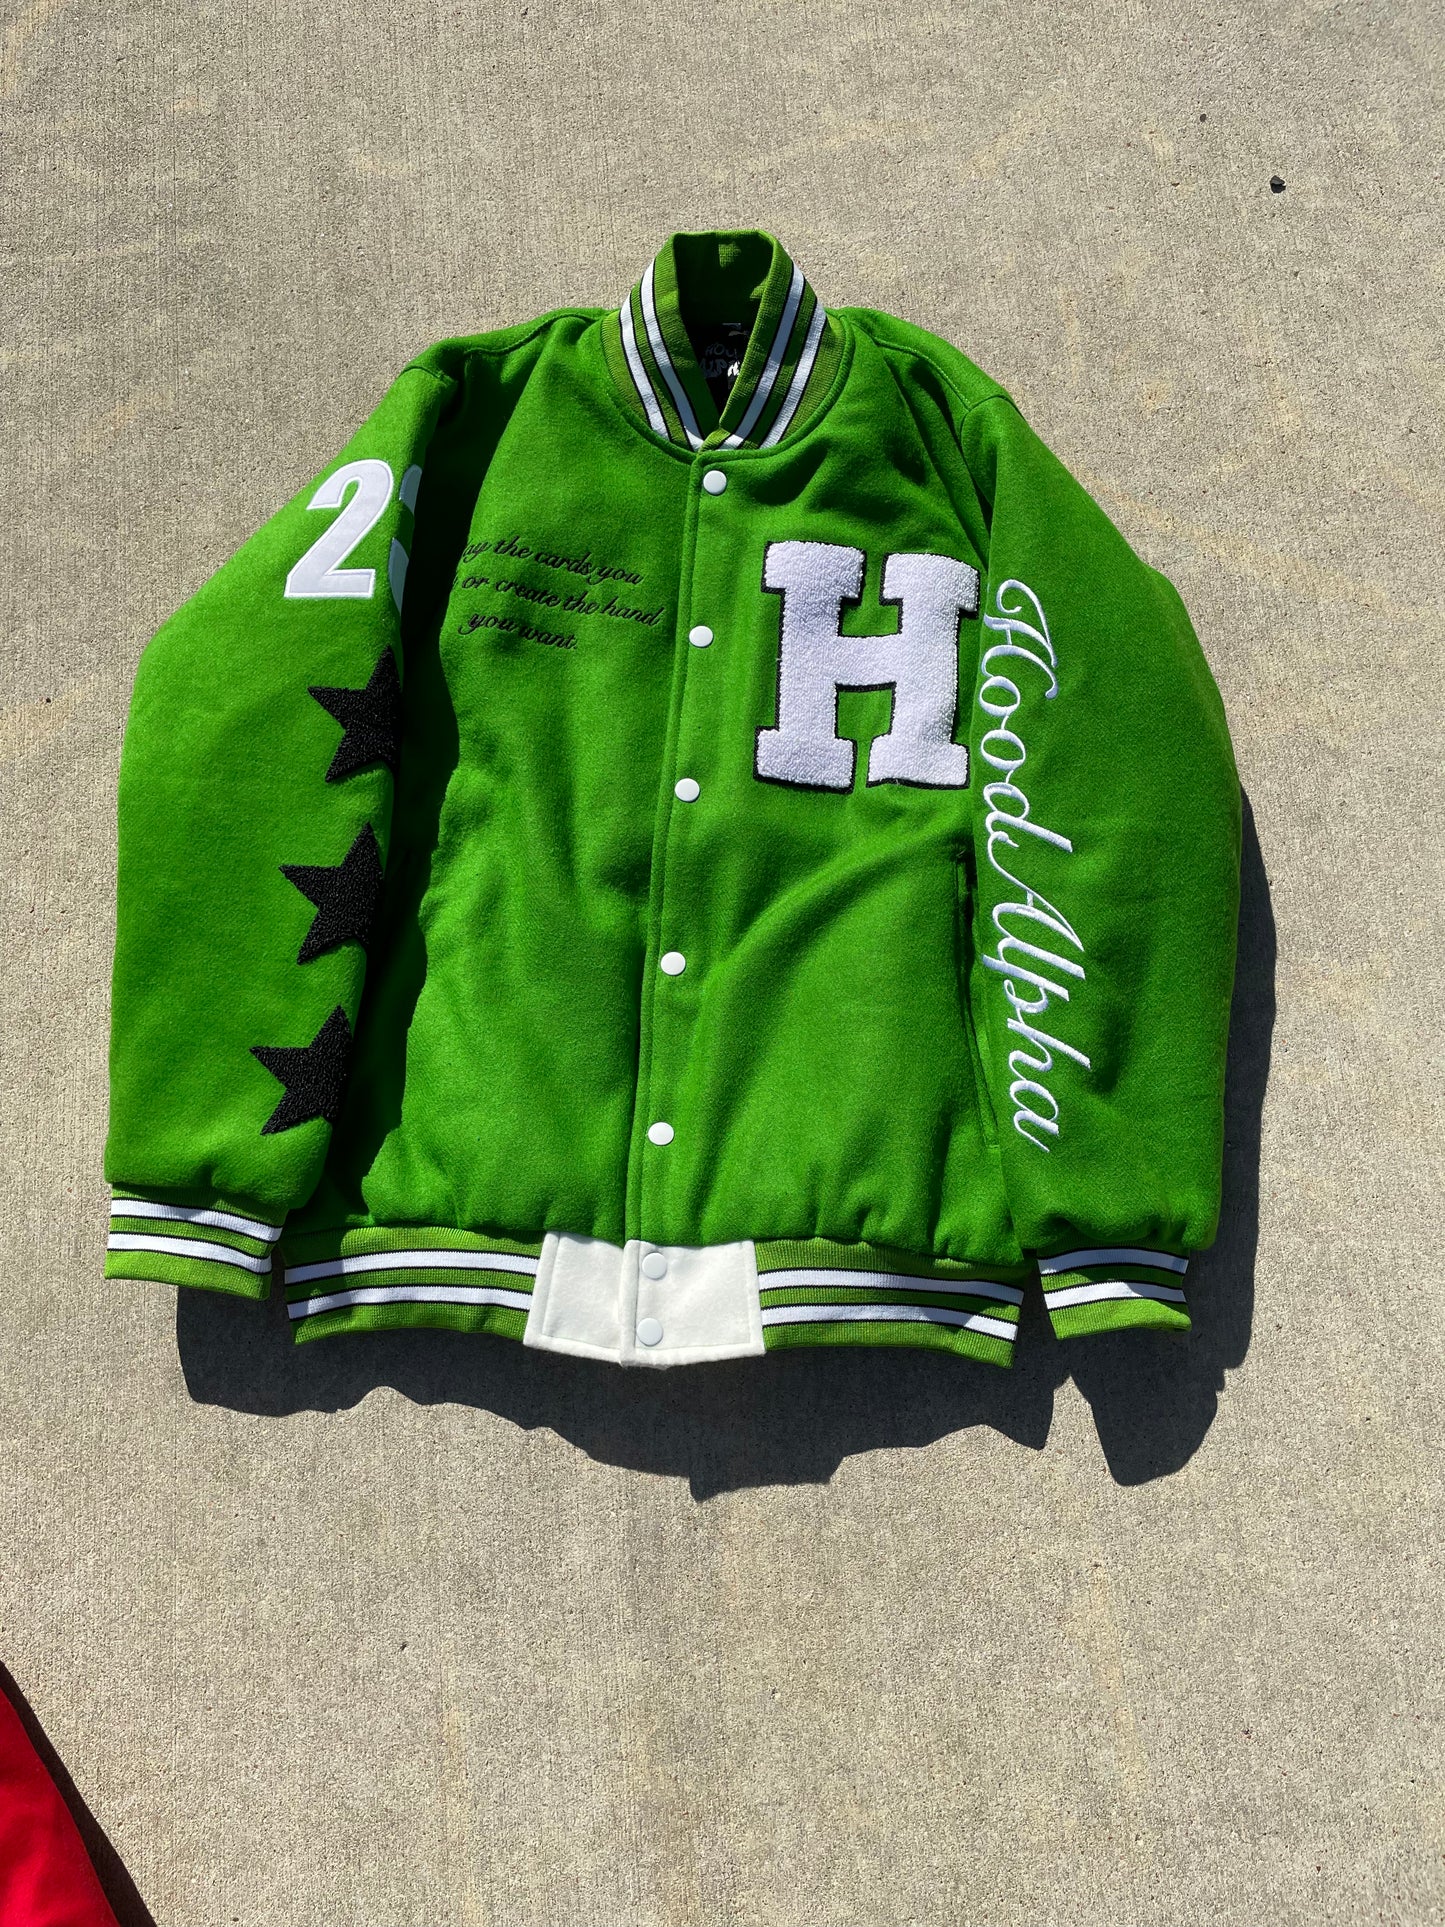 Green varsity jacket